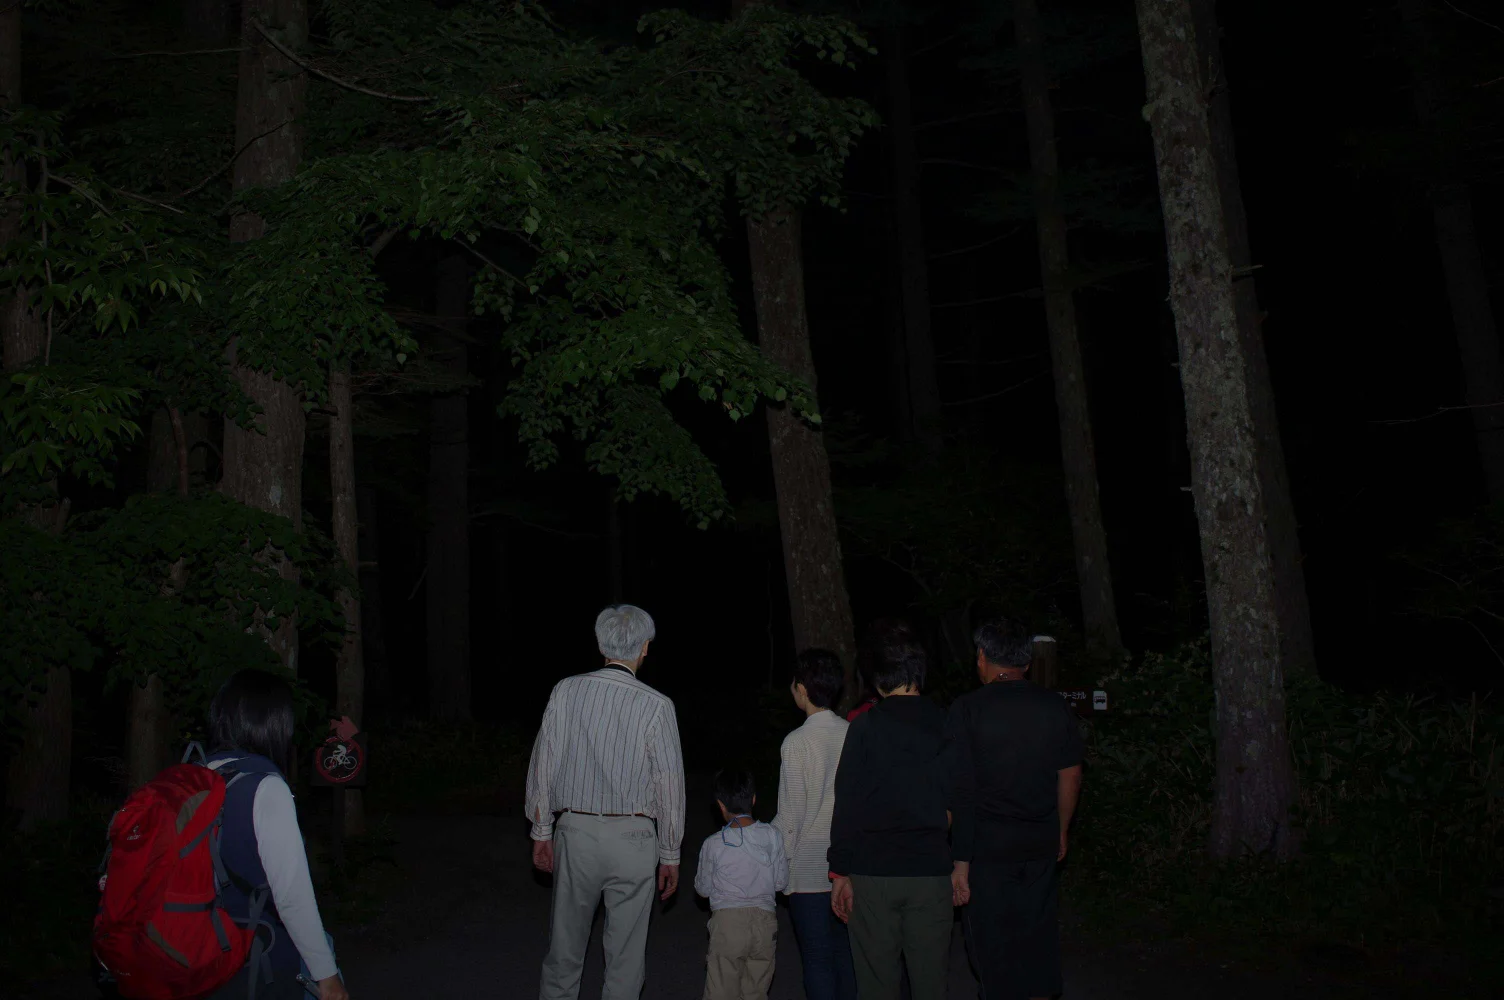 Stargazing or Nighttime Forest Walk at Kamikochi, Nagano